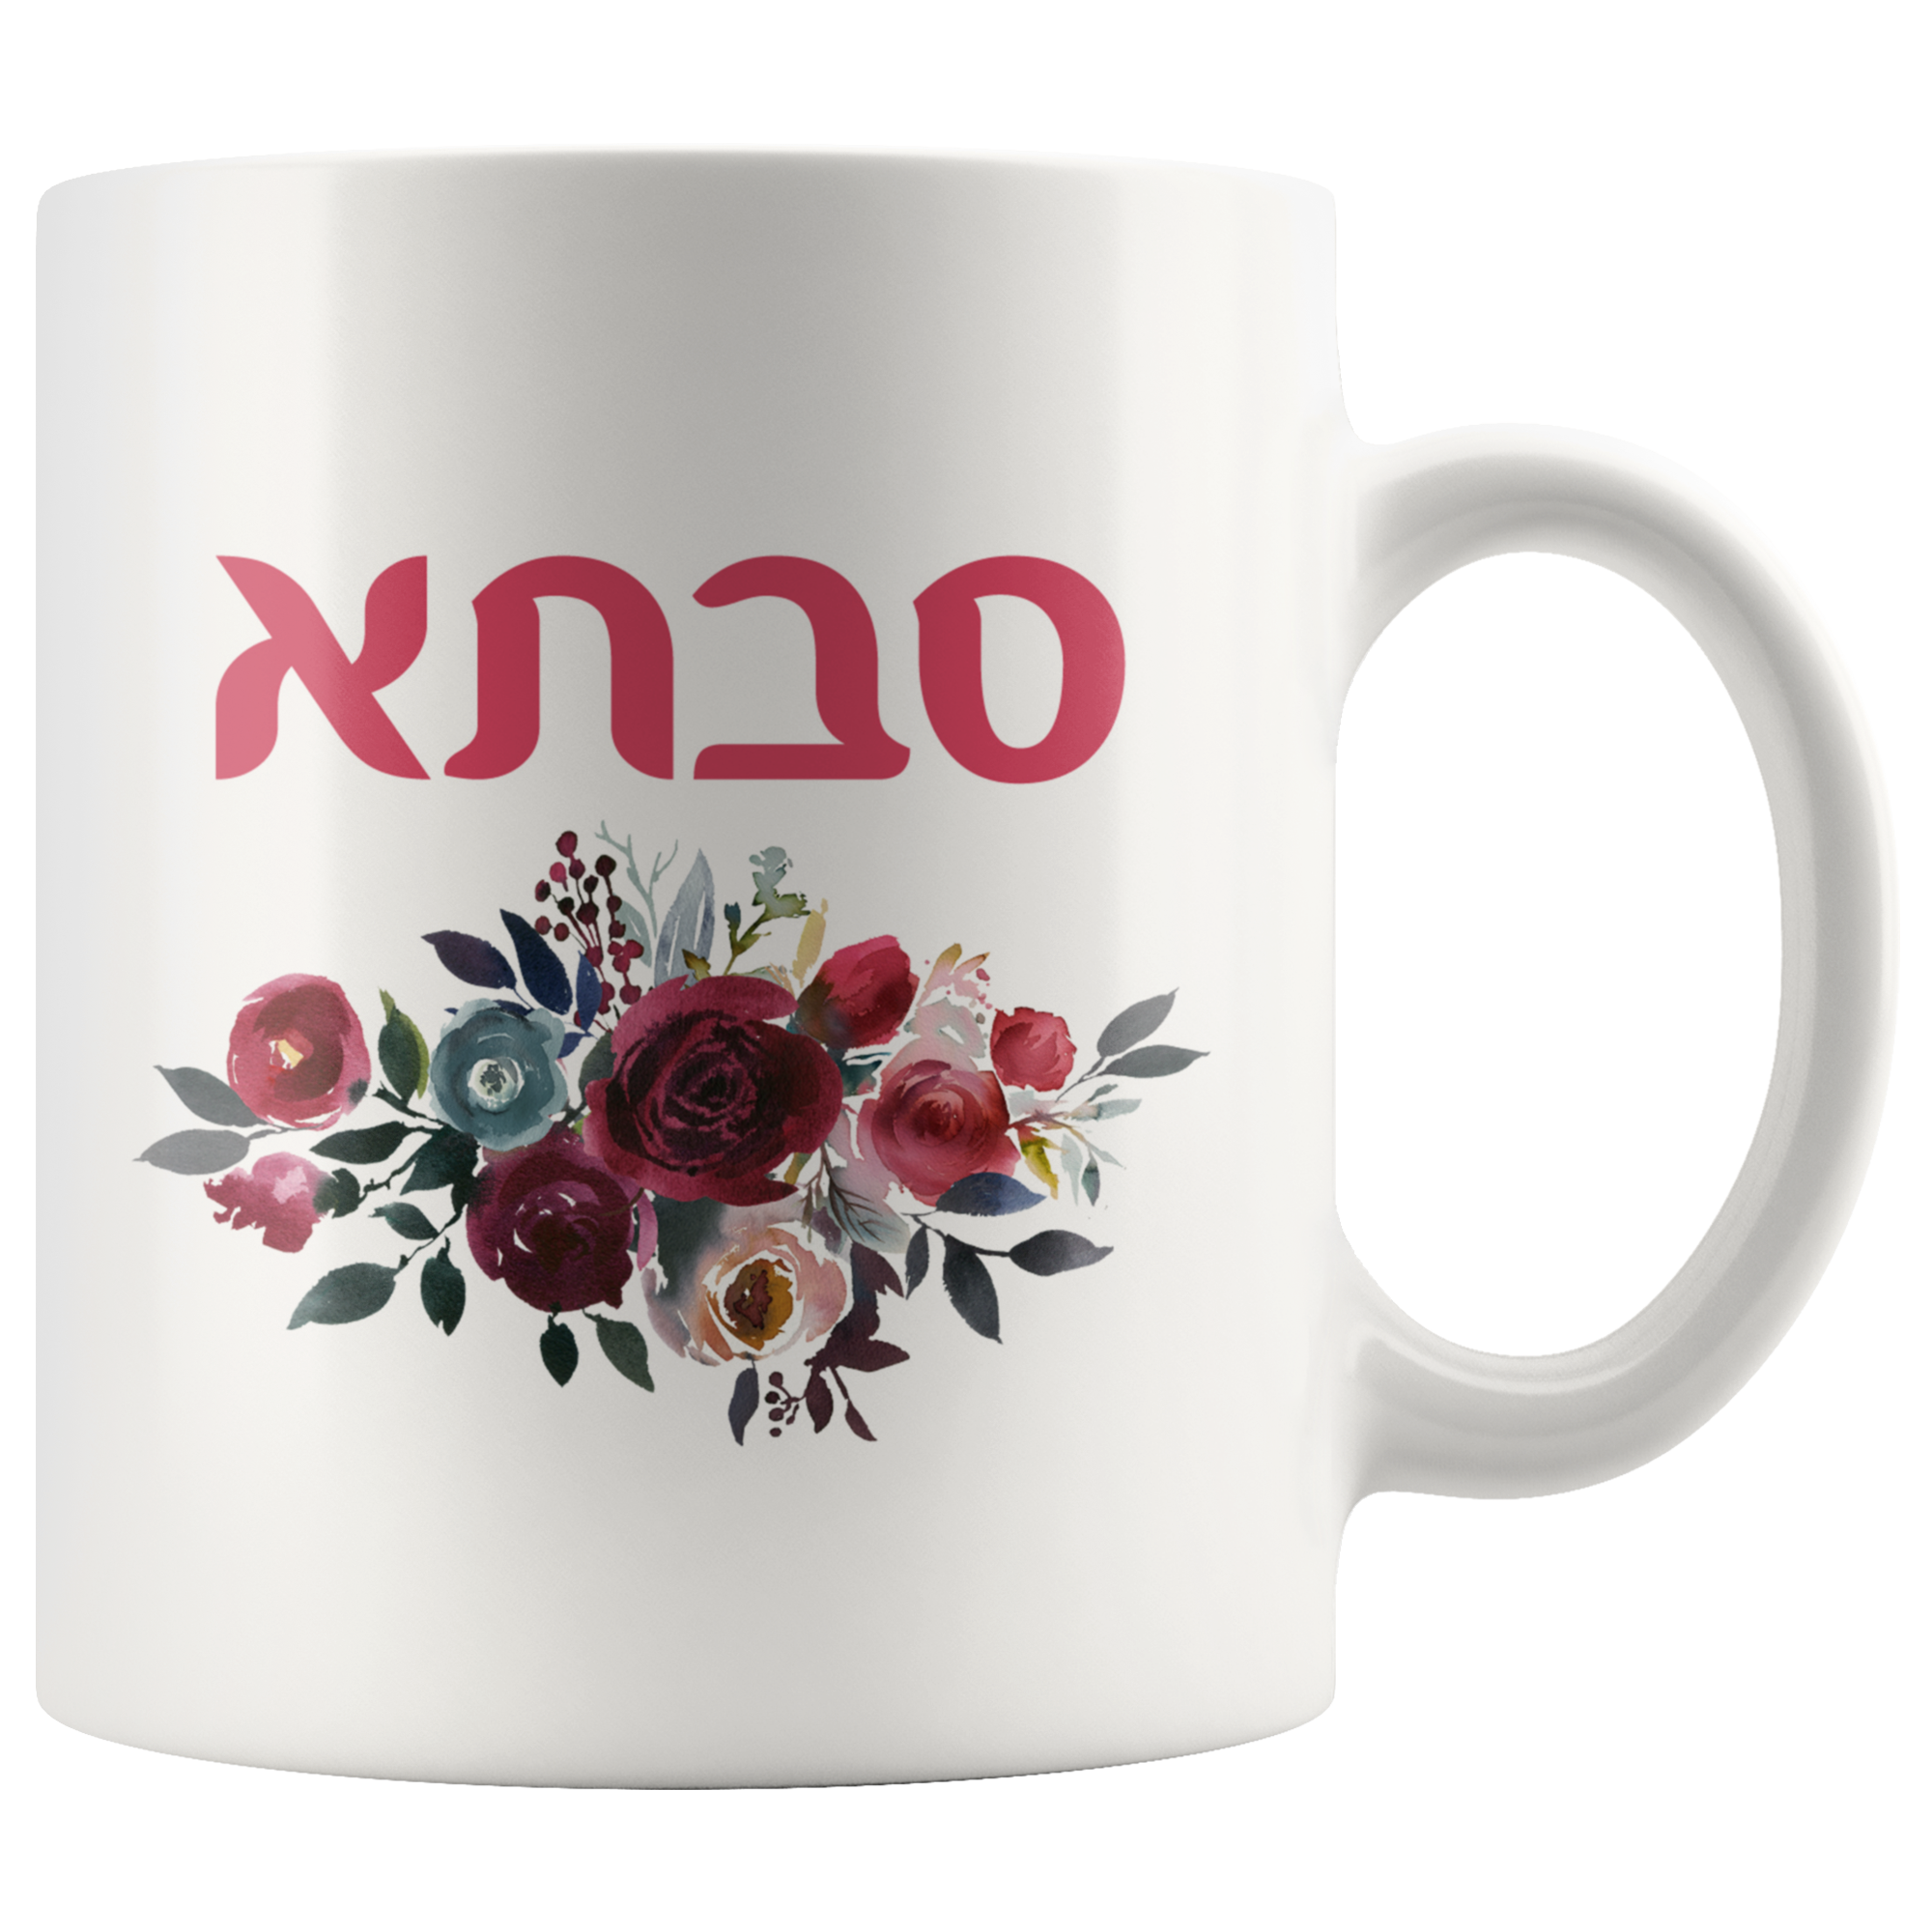 savta floral gift mug